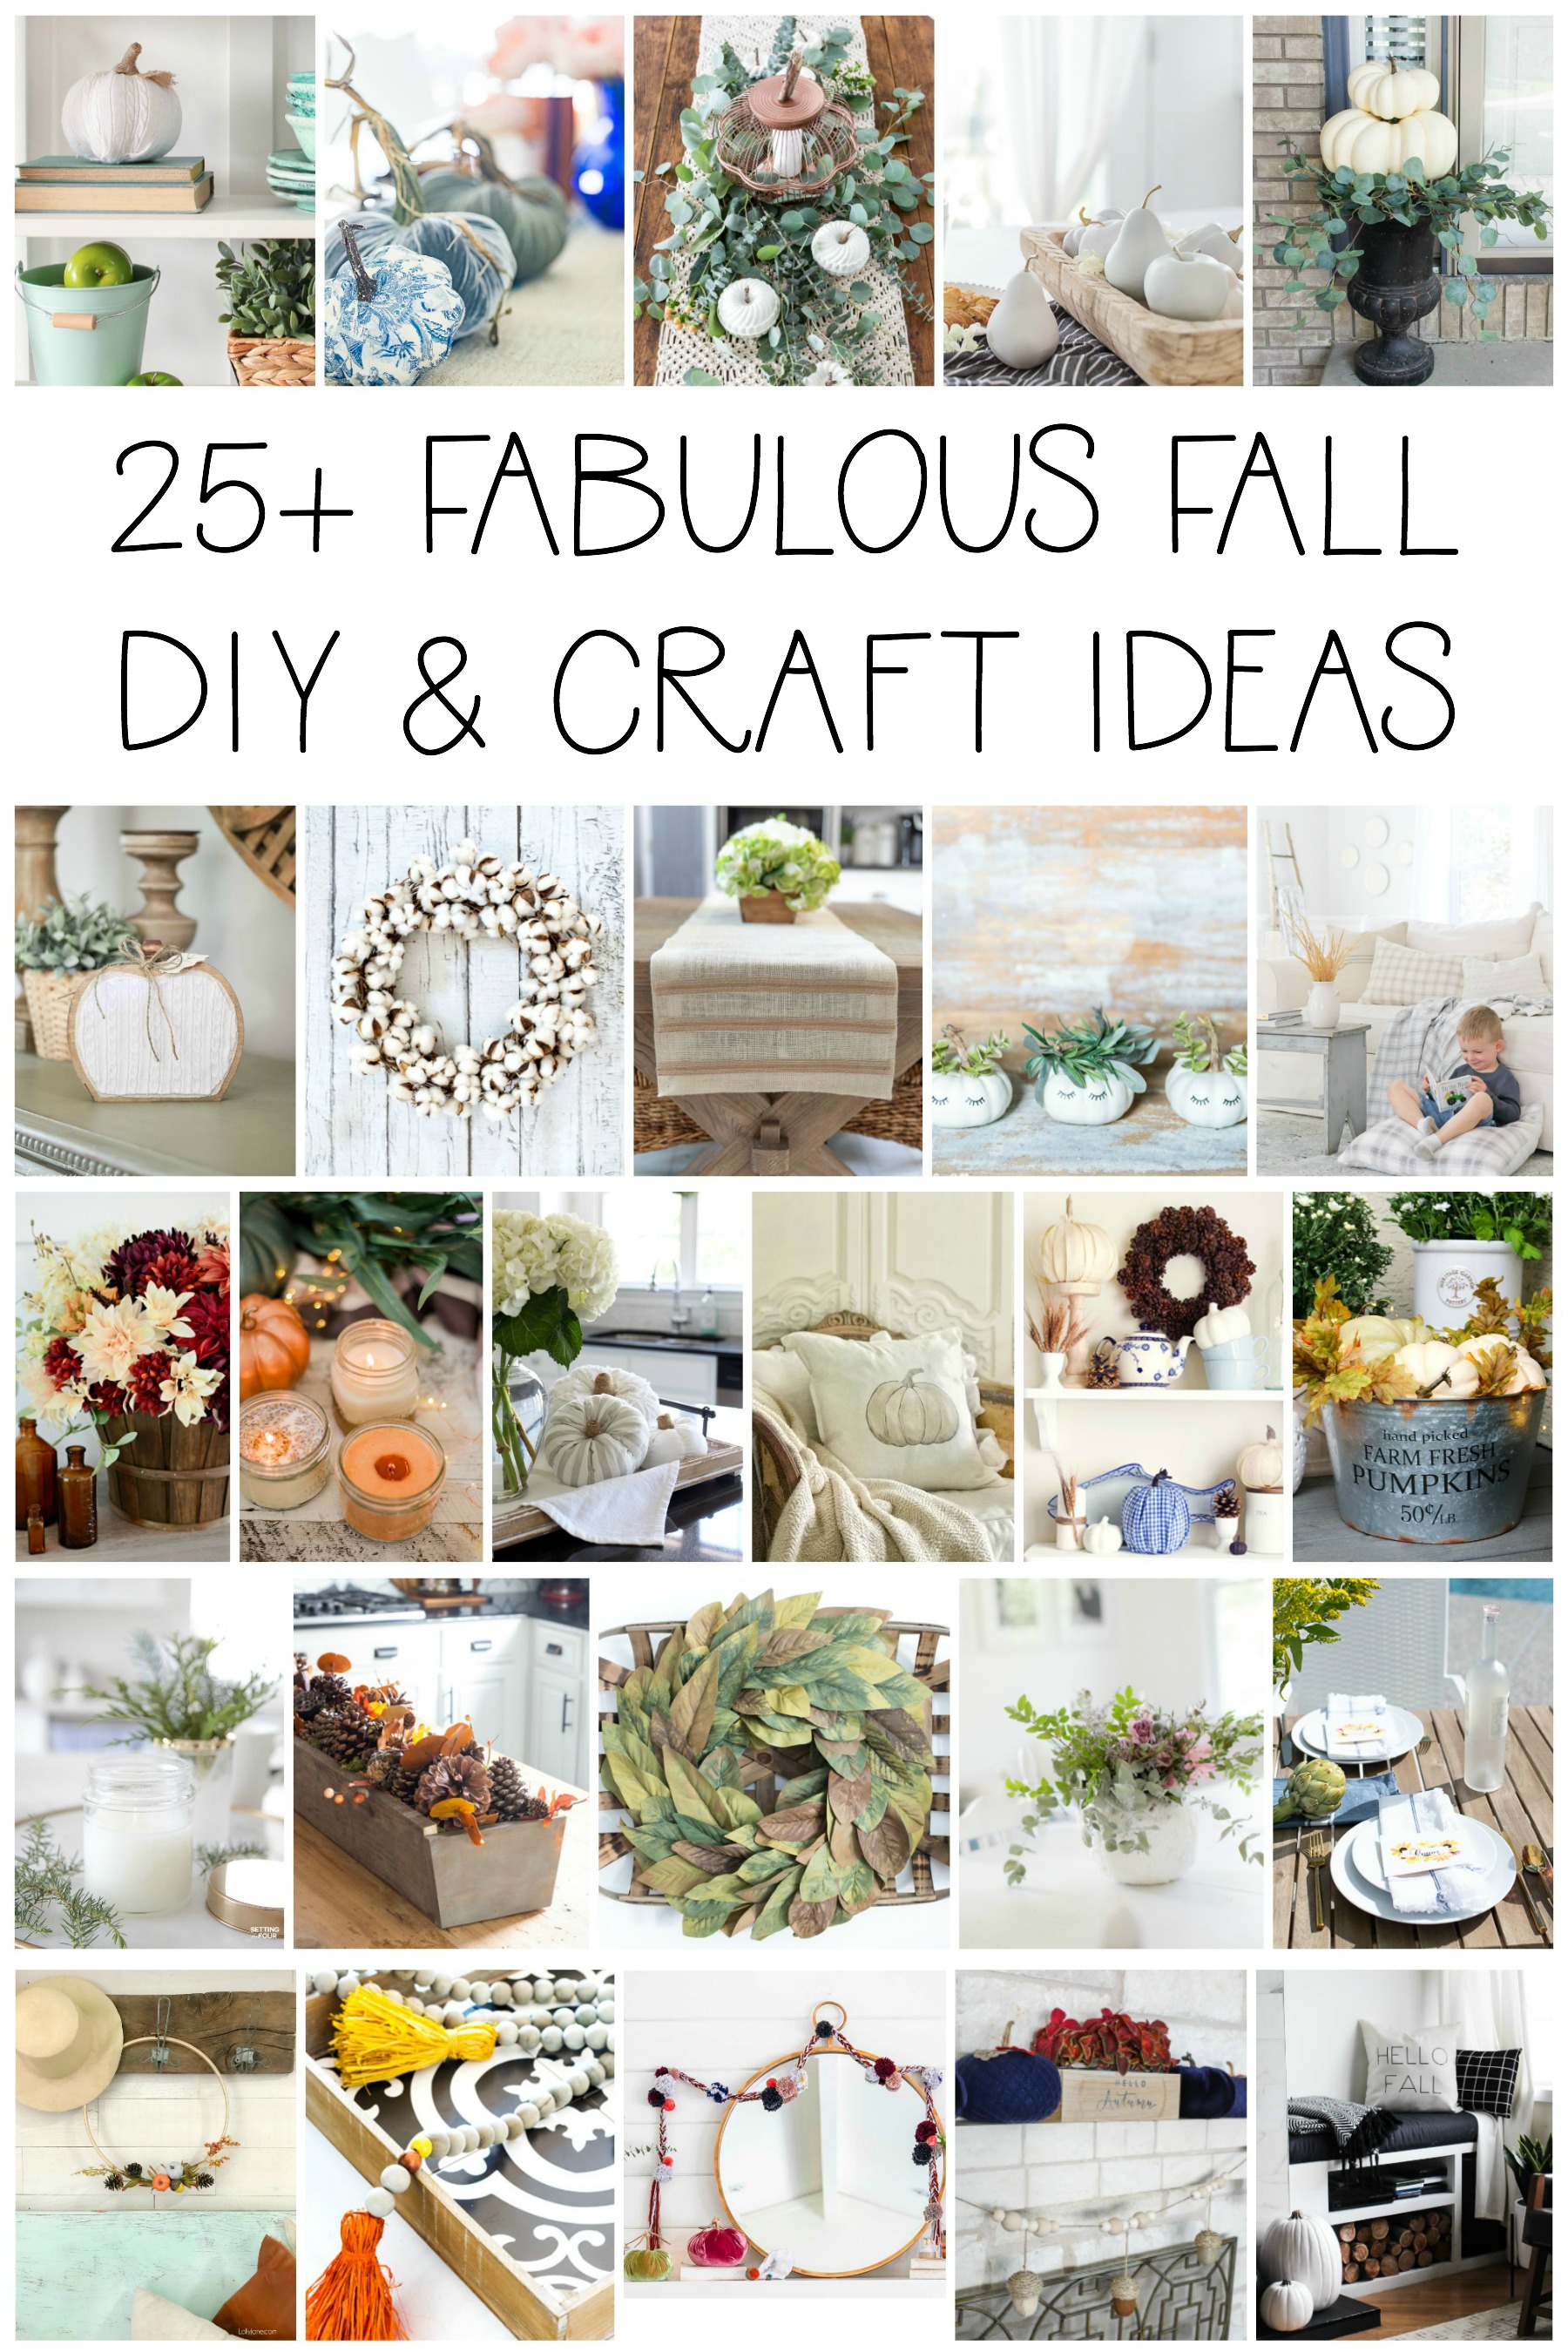 25+Fabulous Fall DIY & Craft Ideas poster.